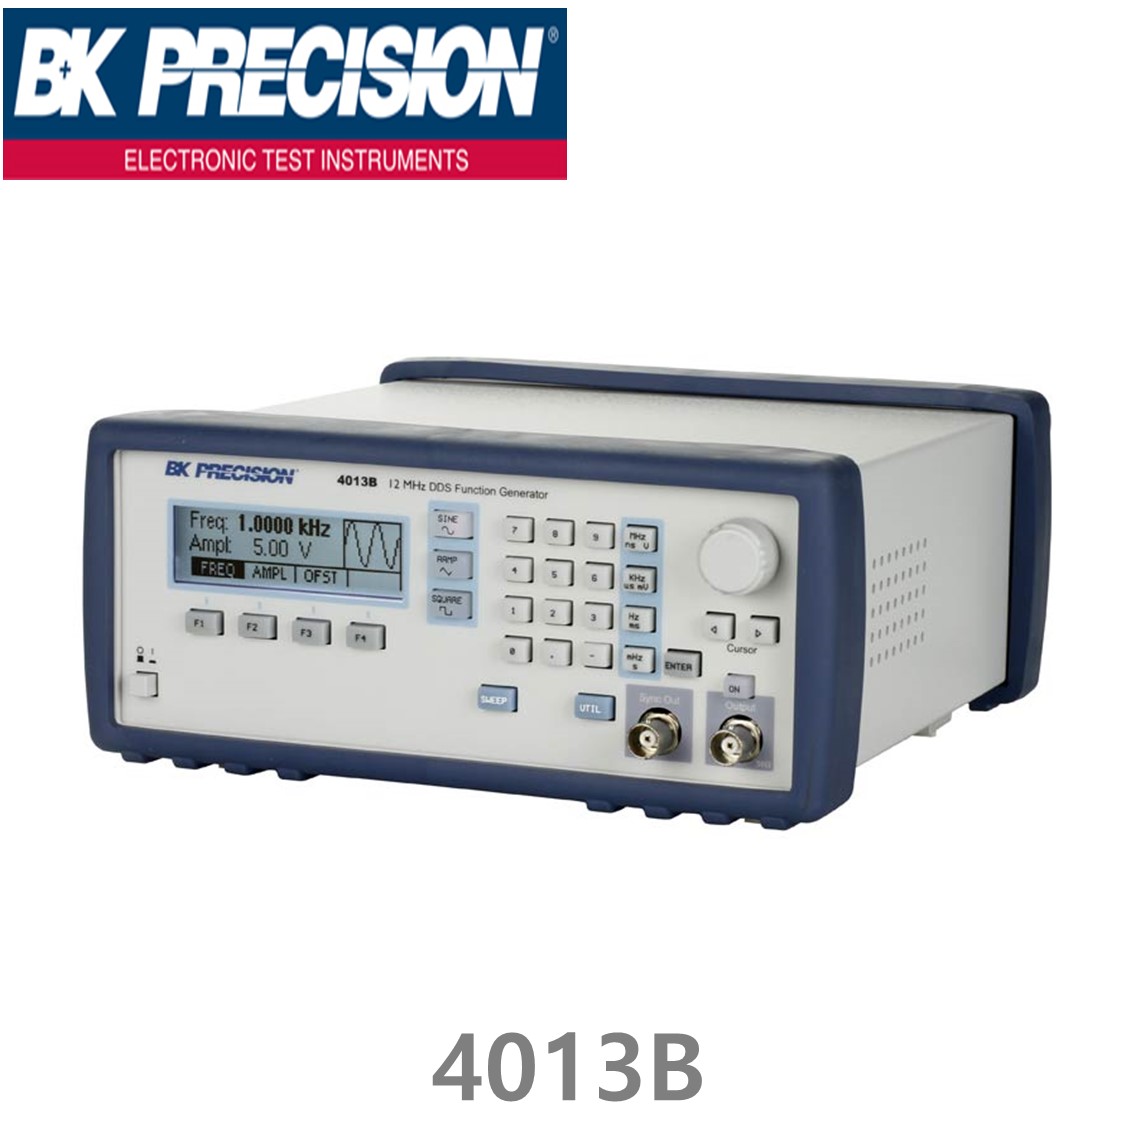 [ BK PRECISION ] BK 4013B, 12MHz, DDS Sweep Function Generator, 펑션제너레이터, 함수발생기, B&K 4013B